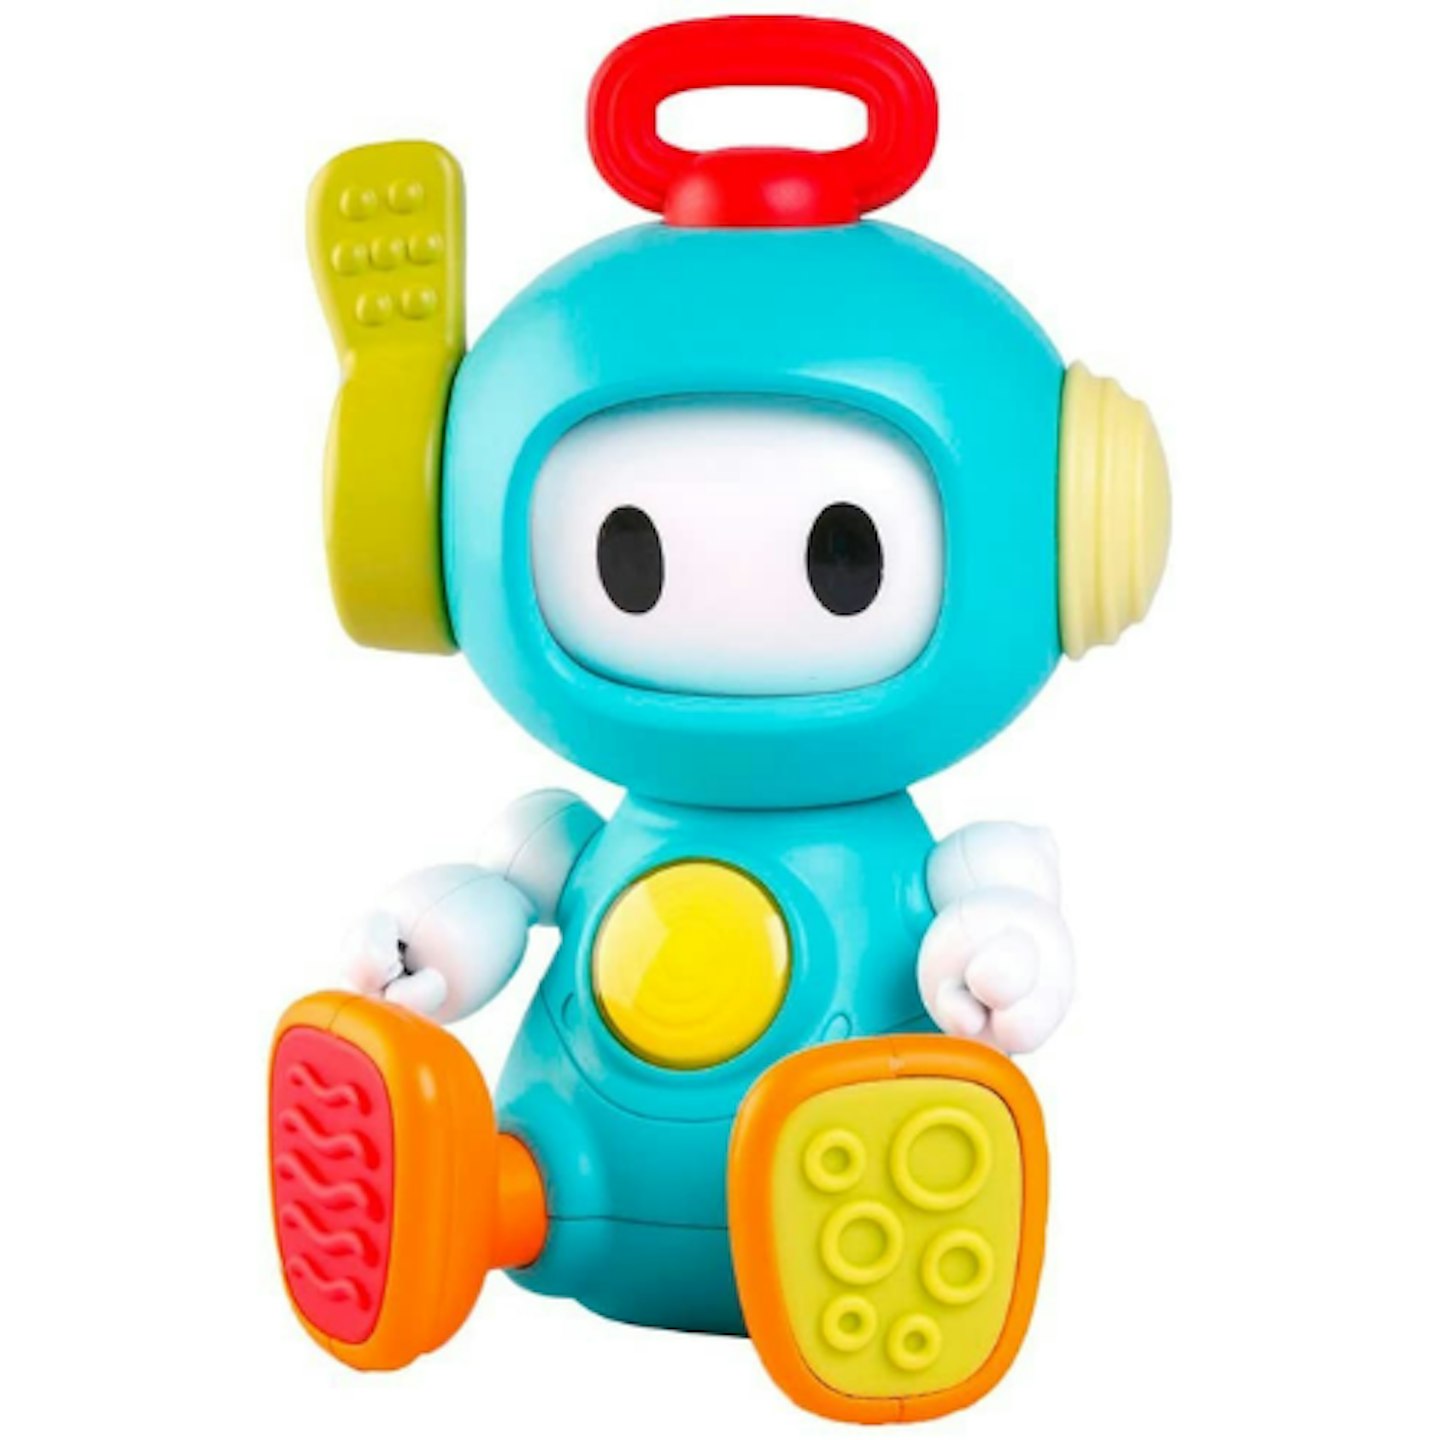 INFANTINO Sensory Elasto Robot